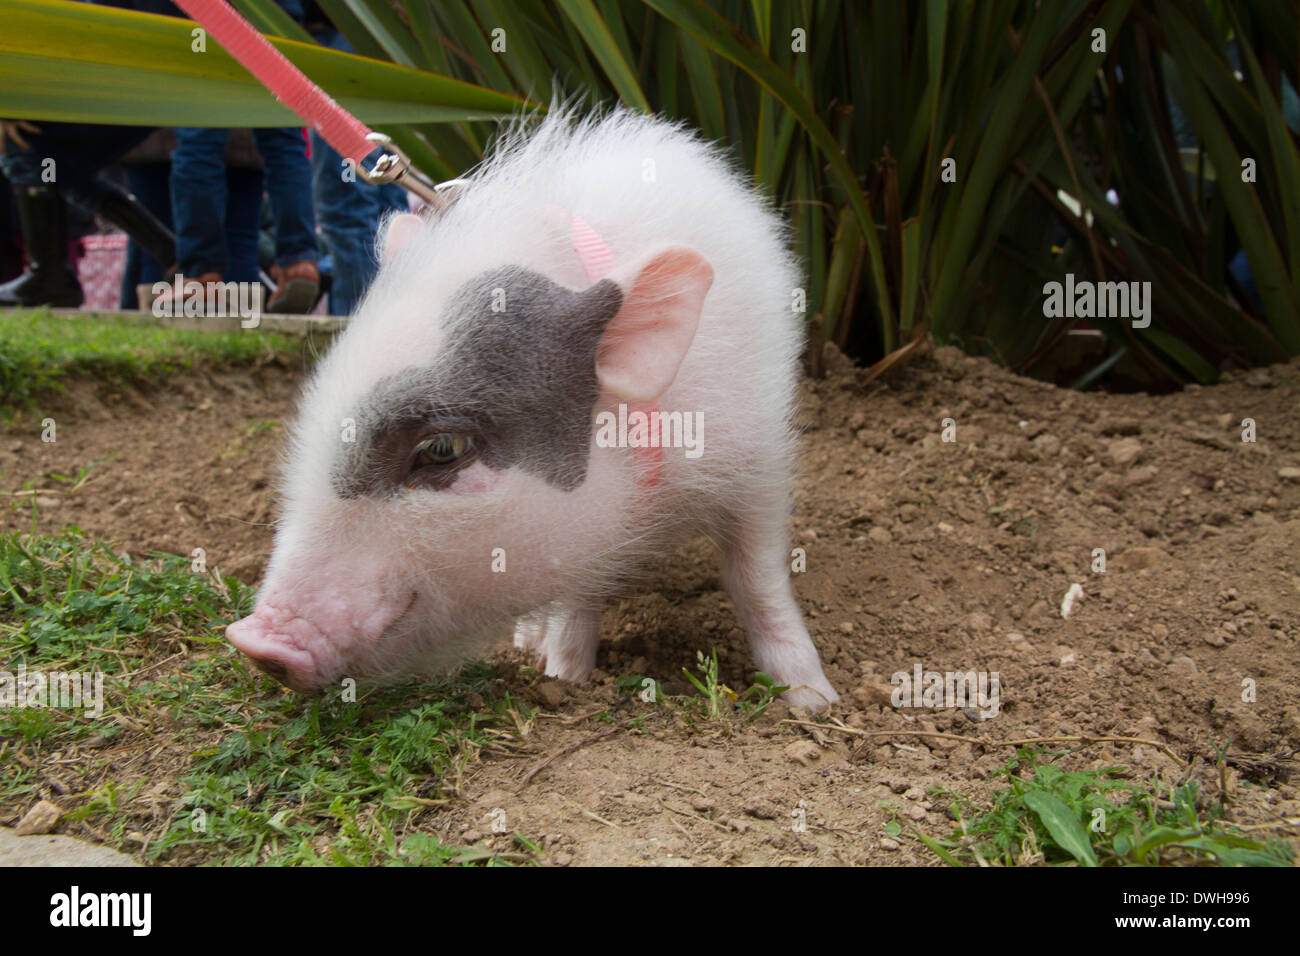 Piglet little pig Stock Photo